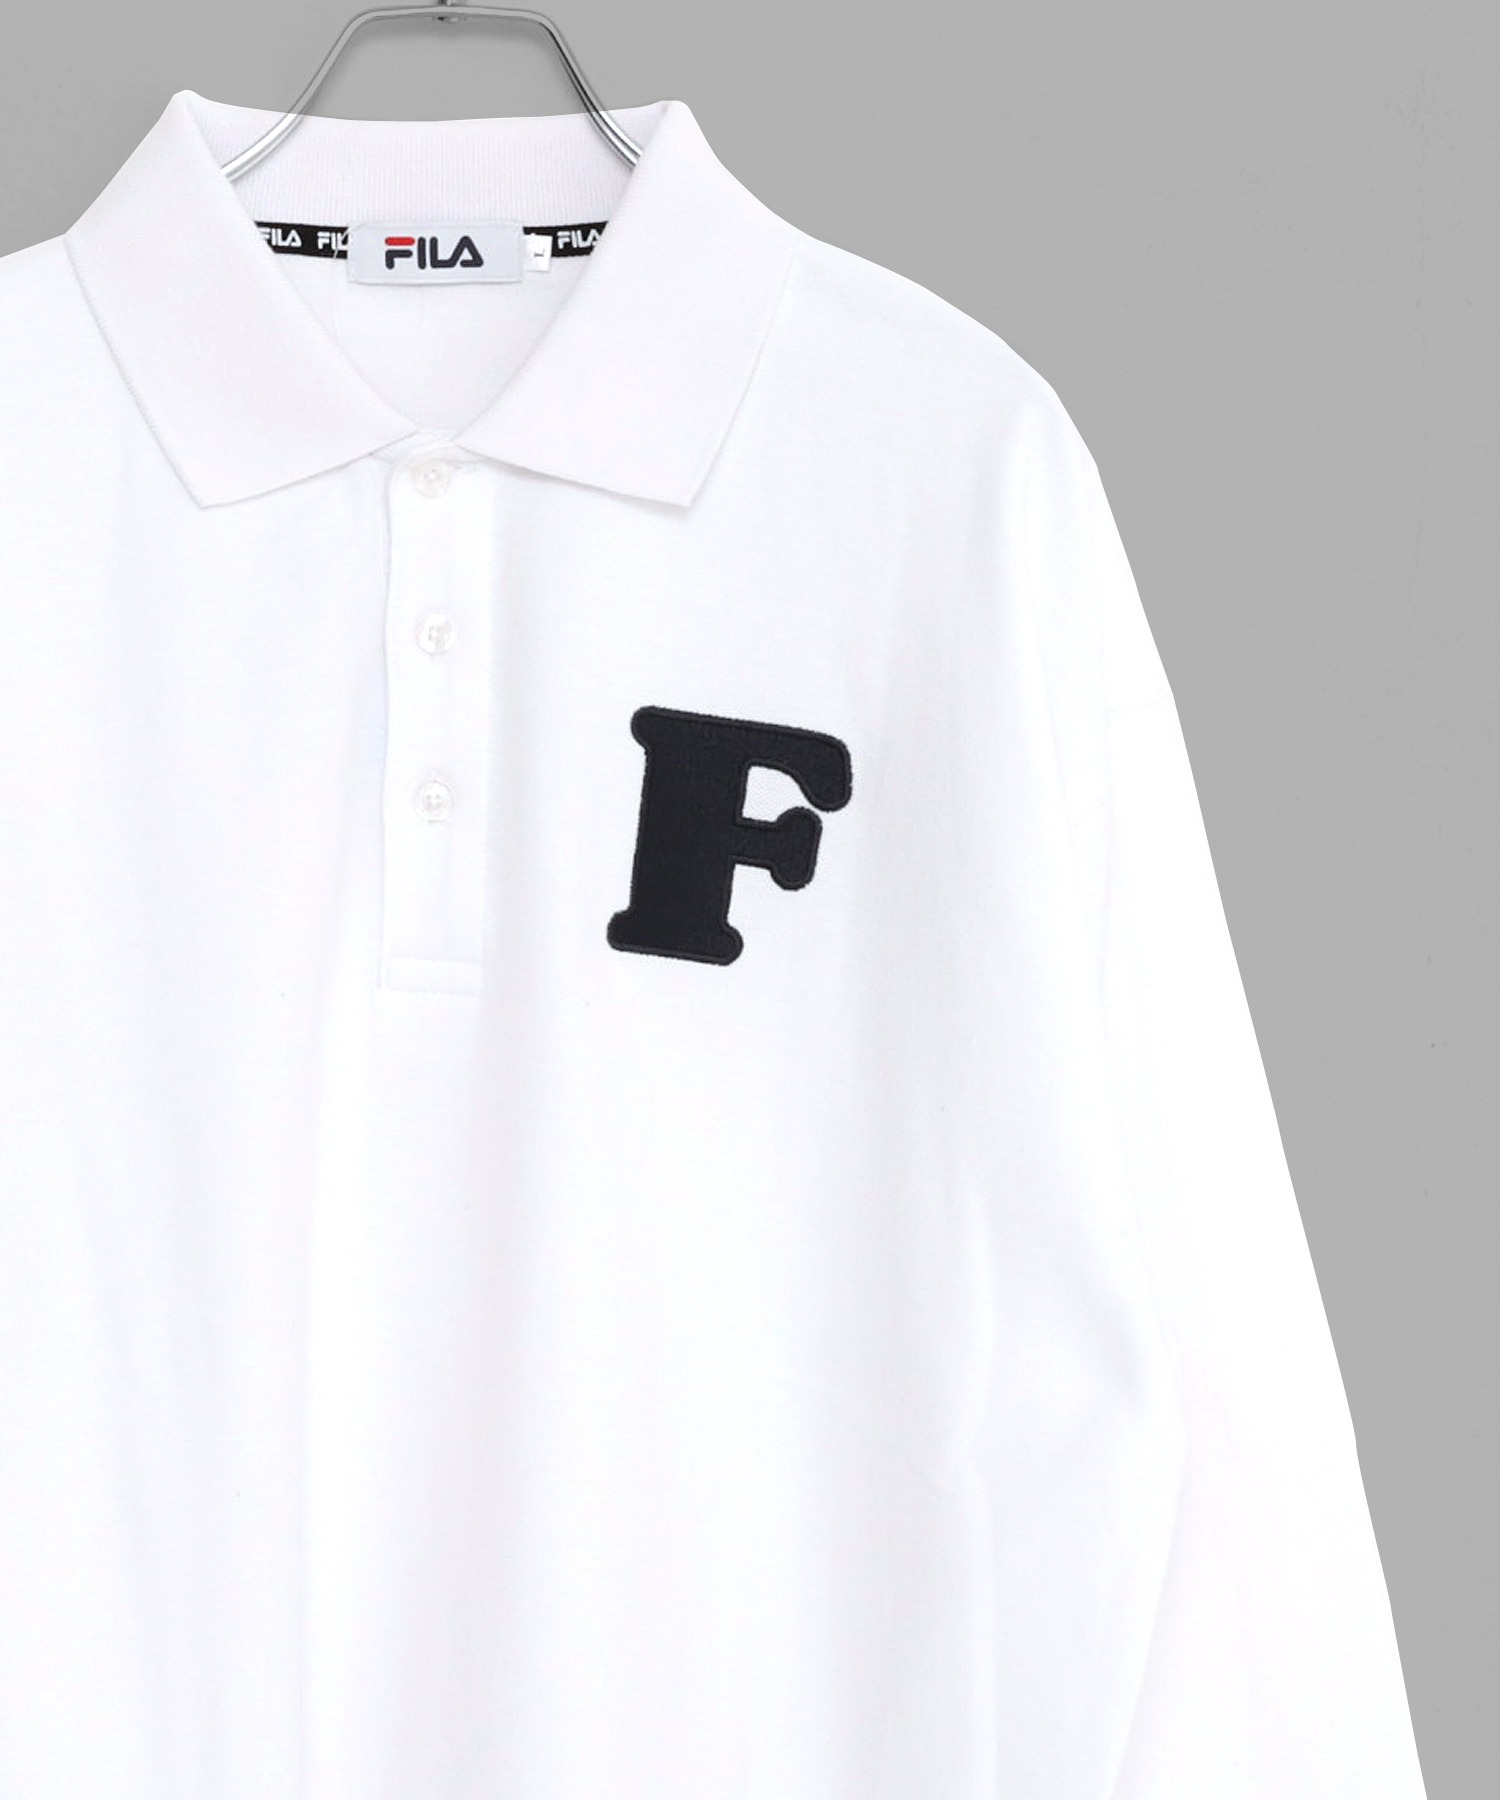 FILAFILA フィラ 最大80%OFFクーポン ワッペンロゴ刺繍 ナンバリング 史上一番安い 綿100% ドロップショルダー 長袖ポロシャツ